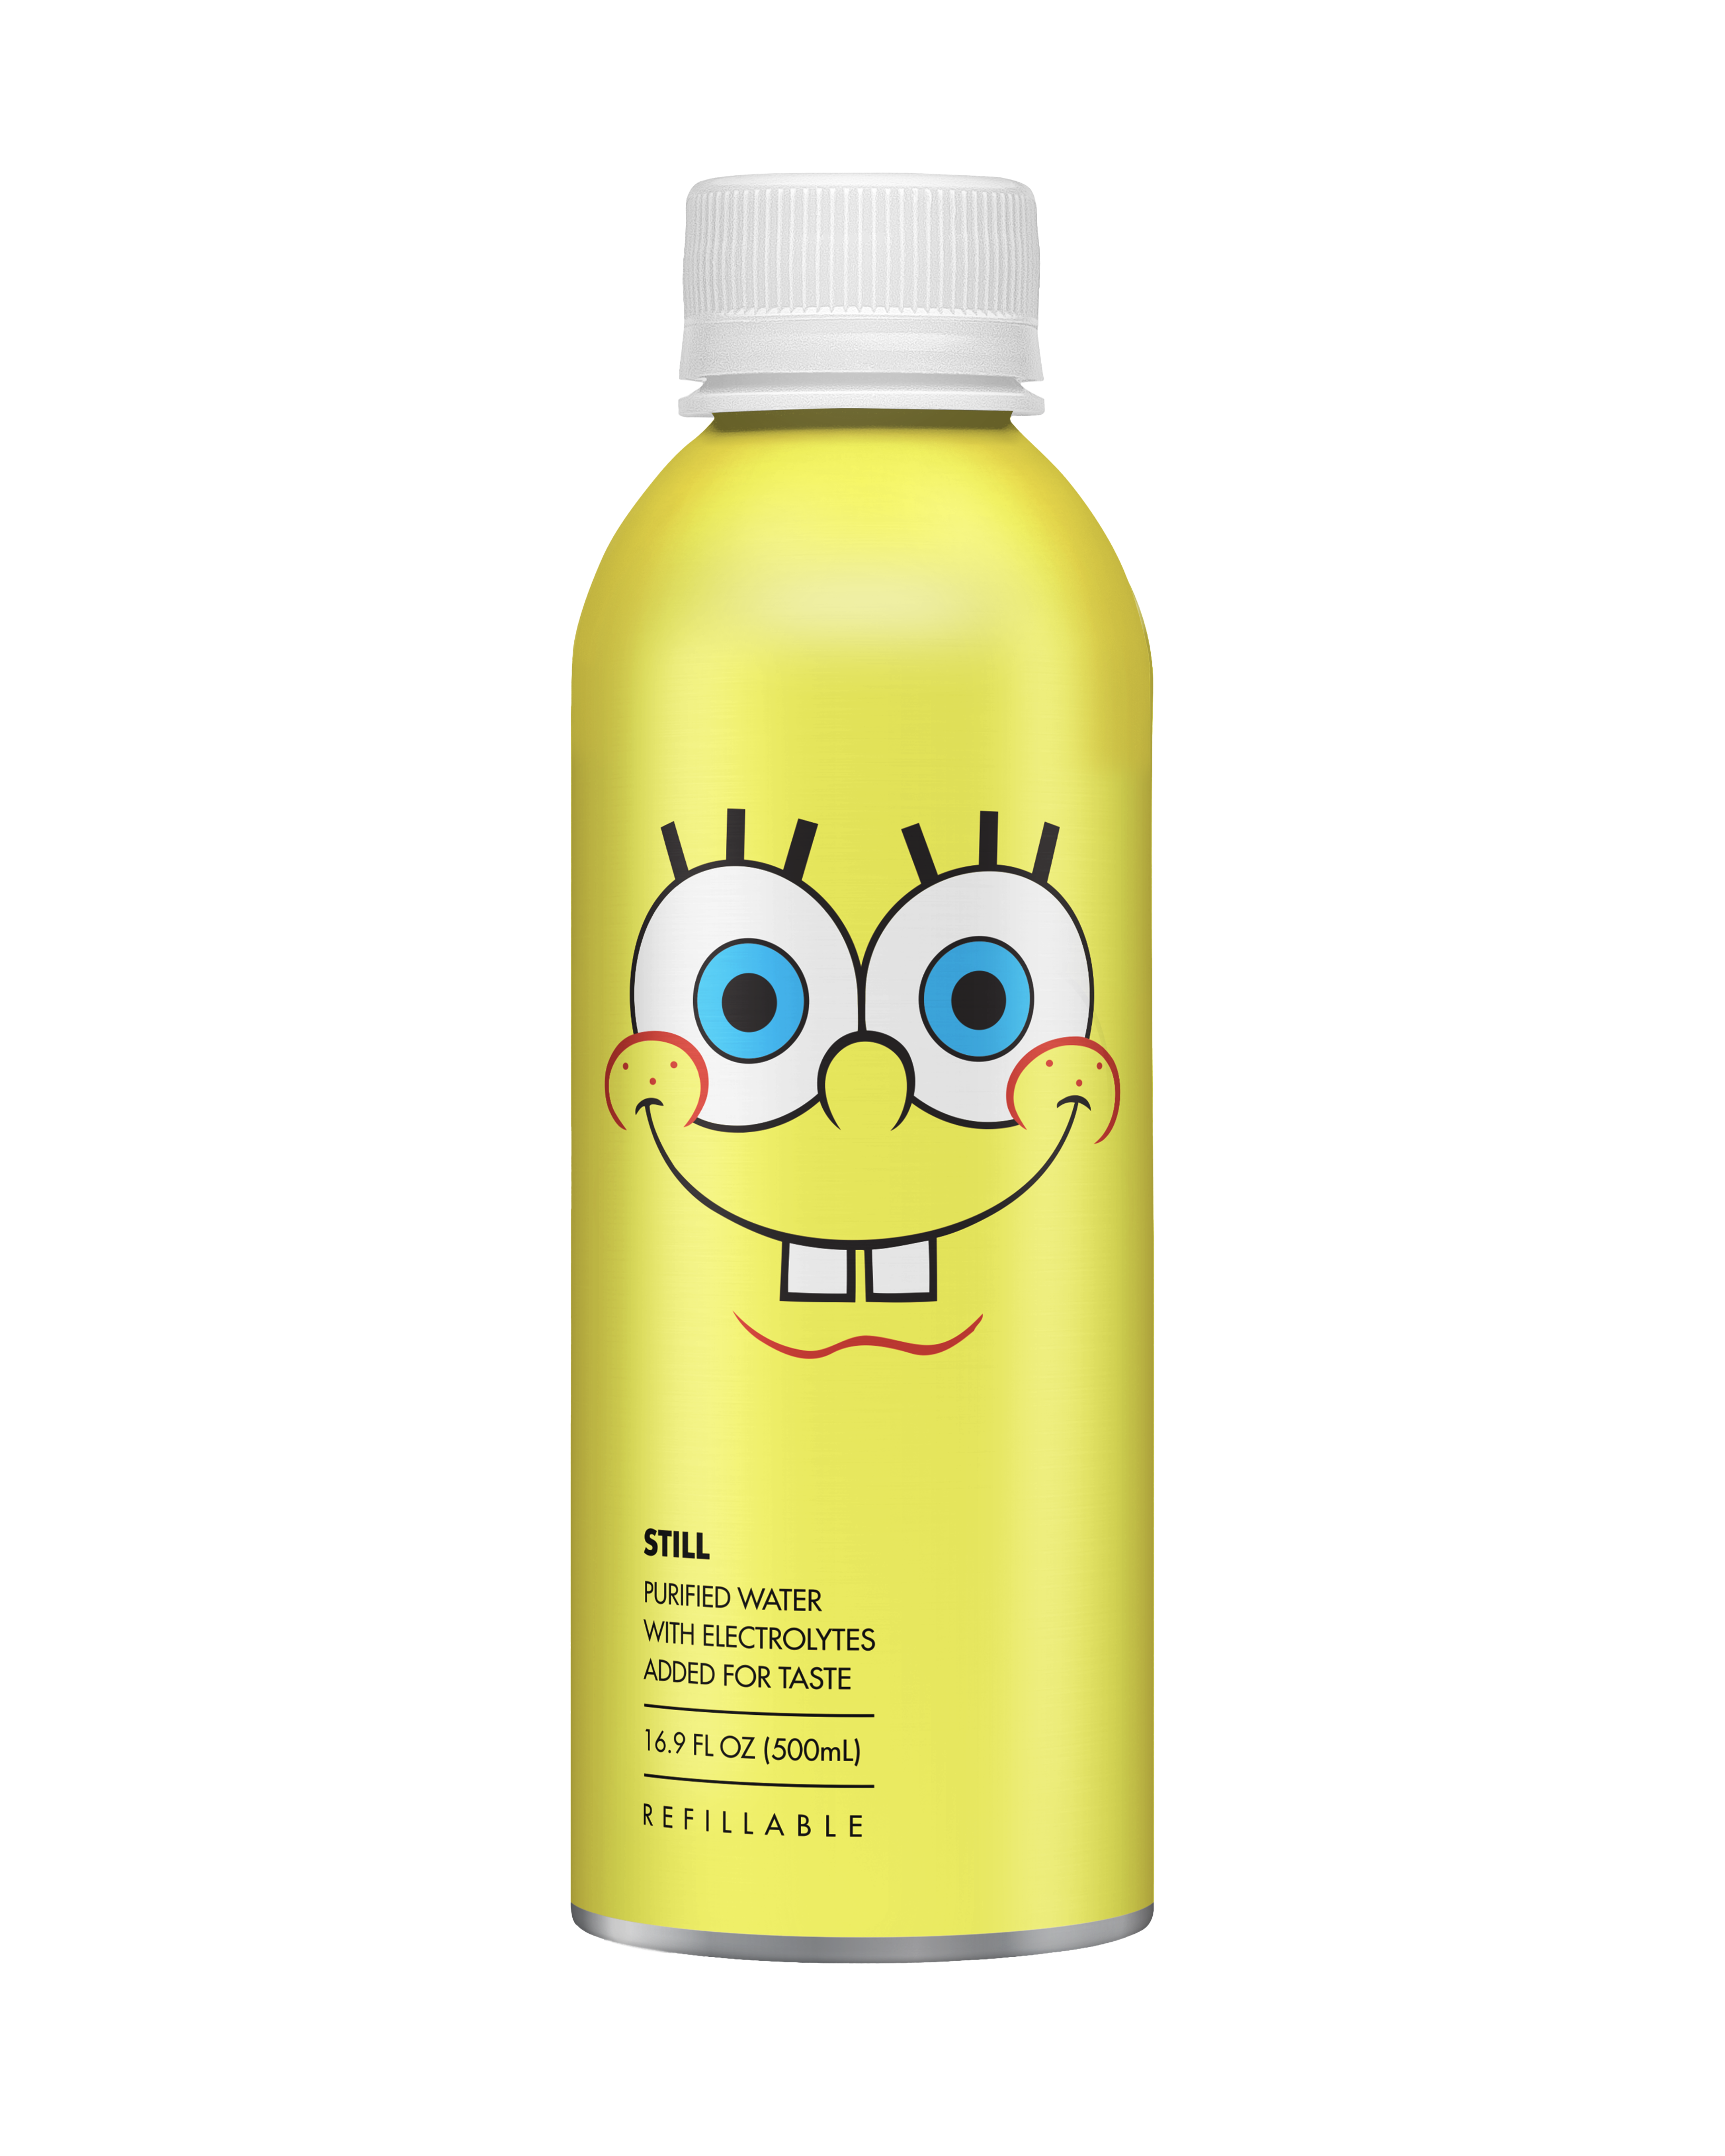 SpongeBob SquarePants/Patrick 18 oz Pull Top Water Bottle-Brand New!RARE  FIND!